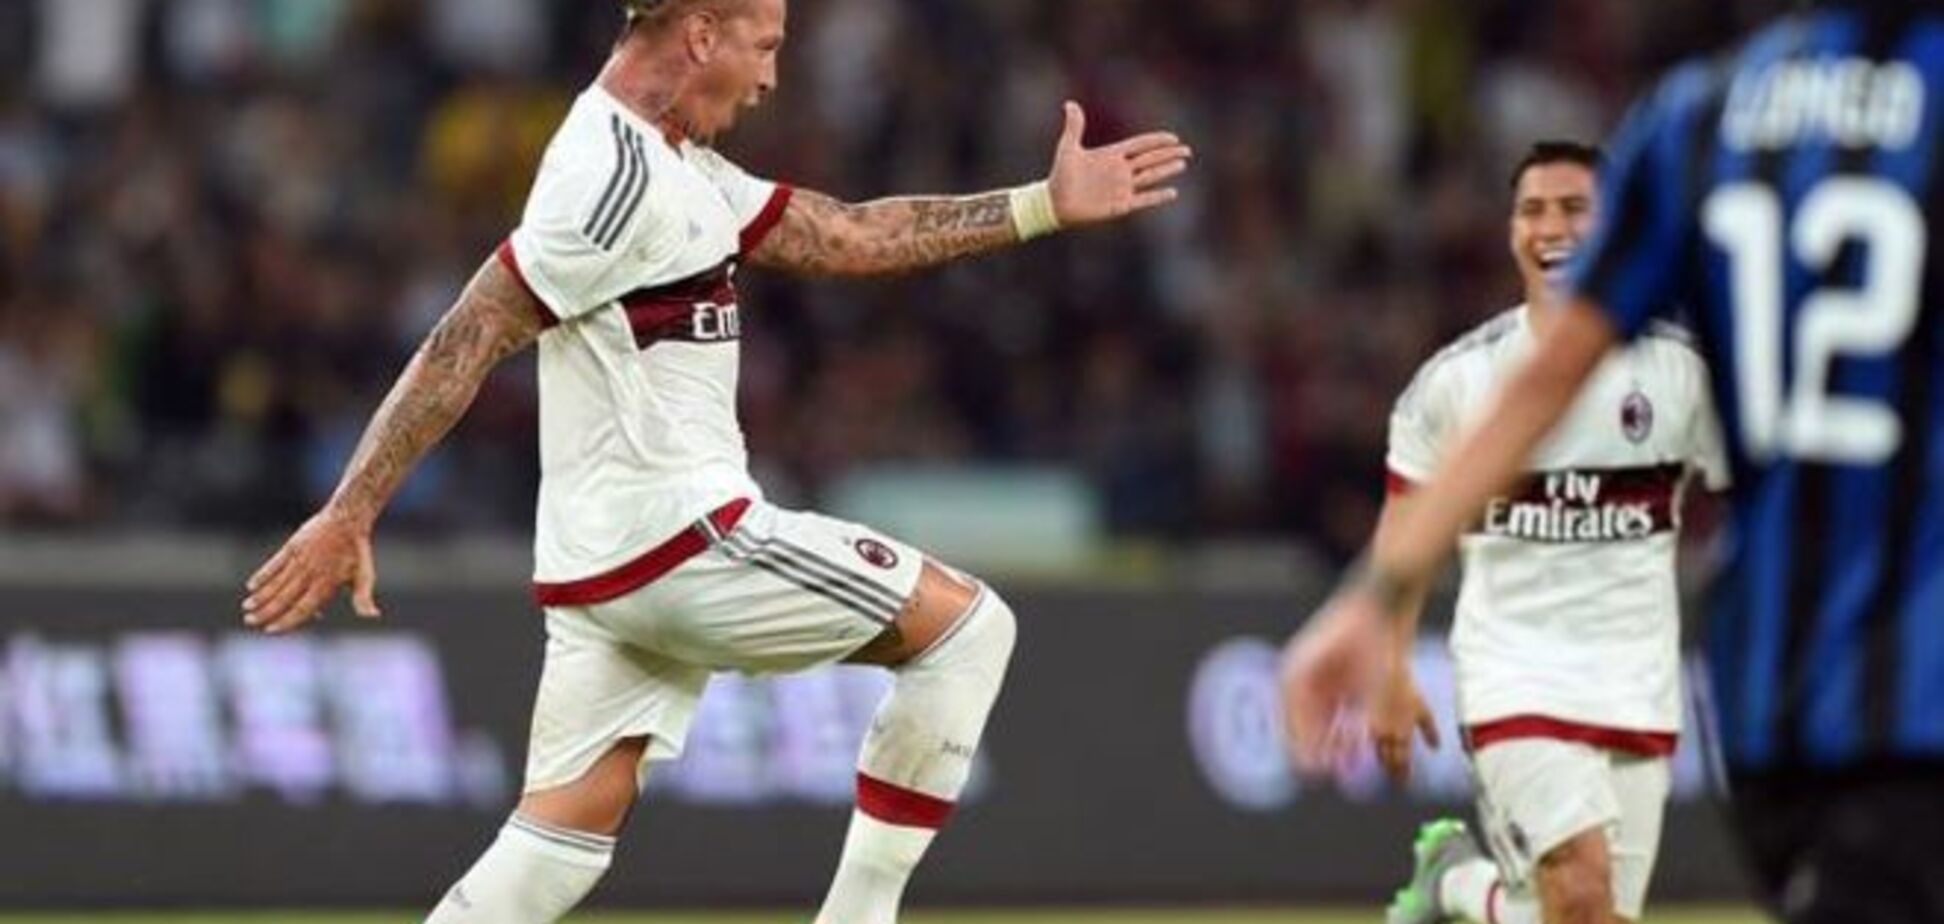 Защитник 'Милана' забил сумасшедший гол: видео суперудара